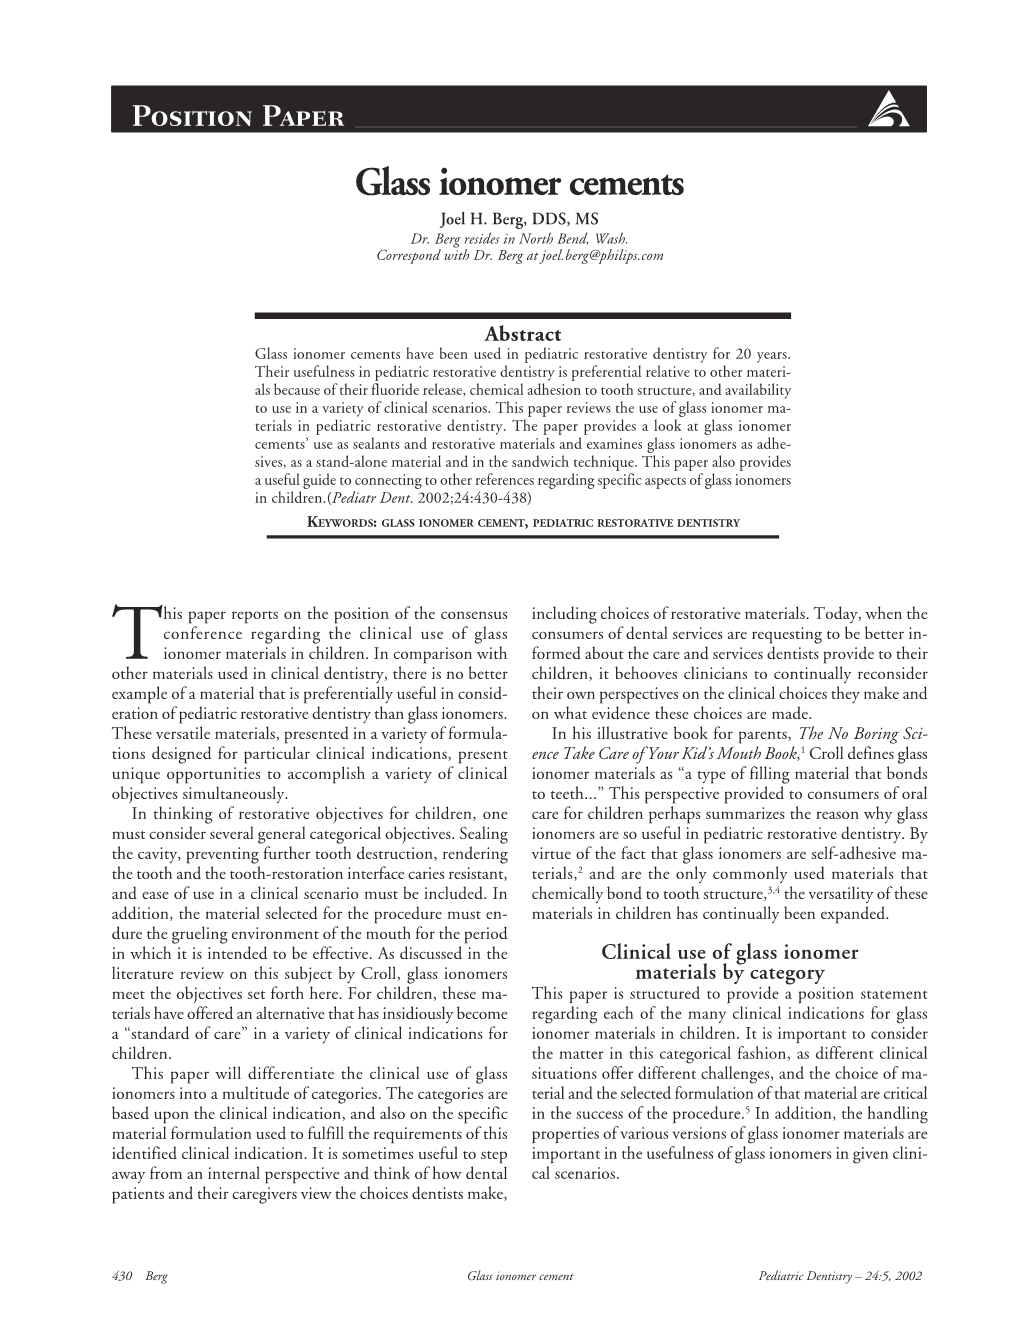 Glass Ionomer Cements Joel H